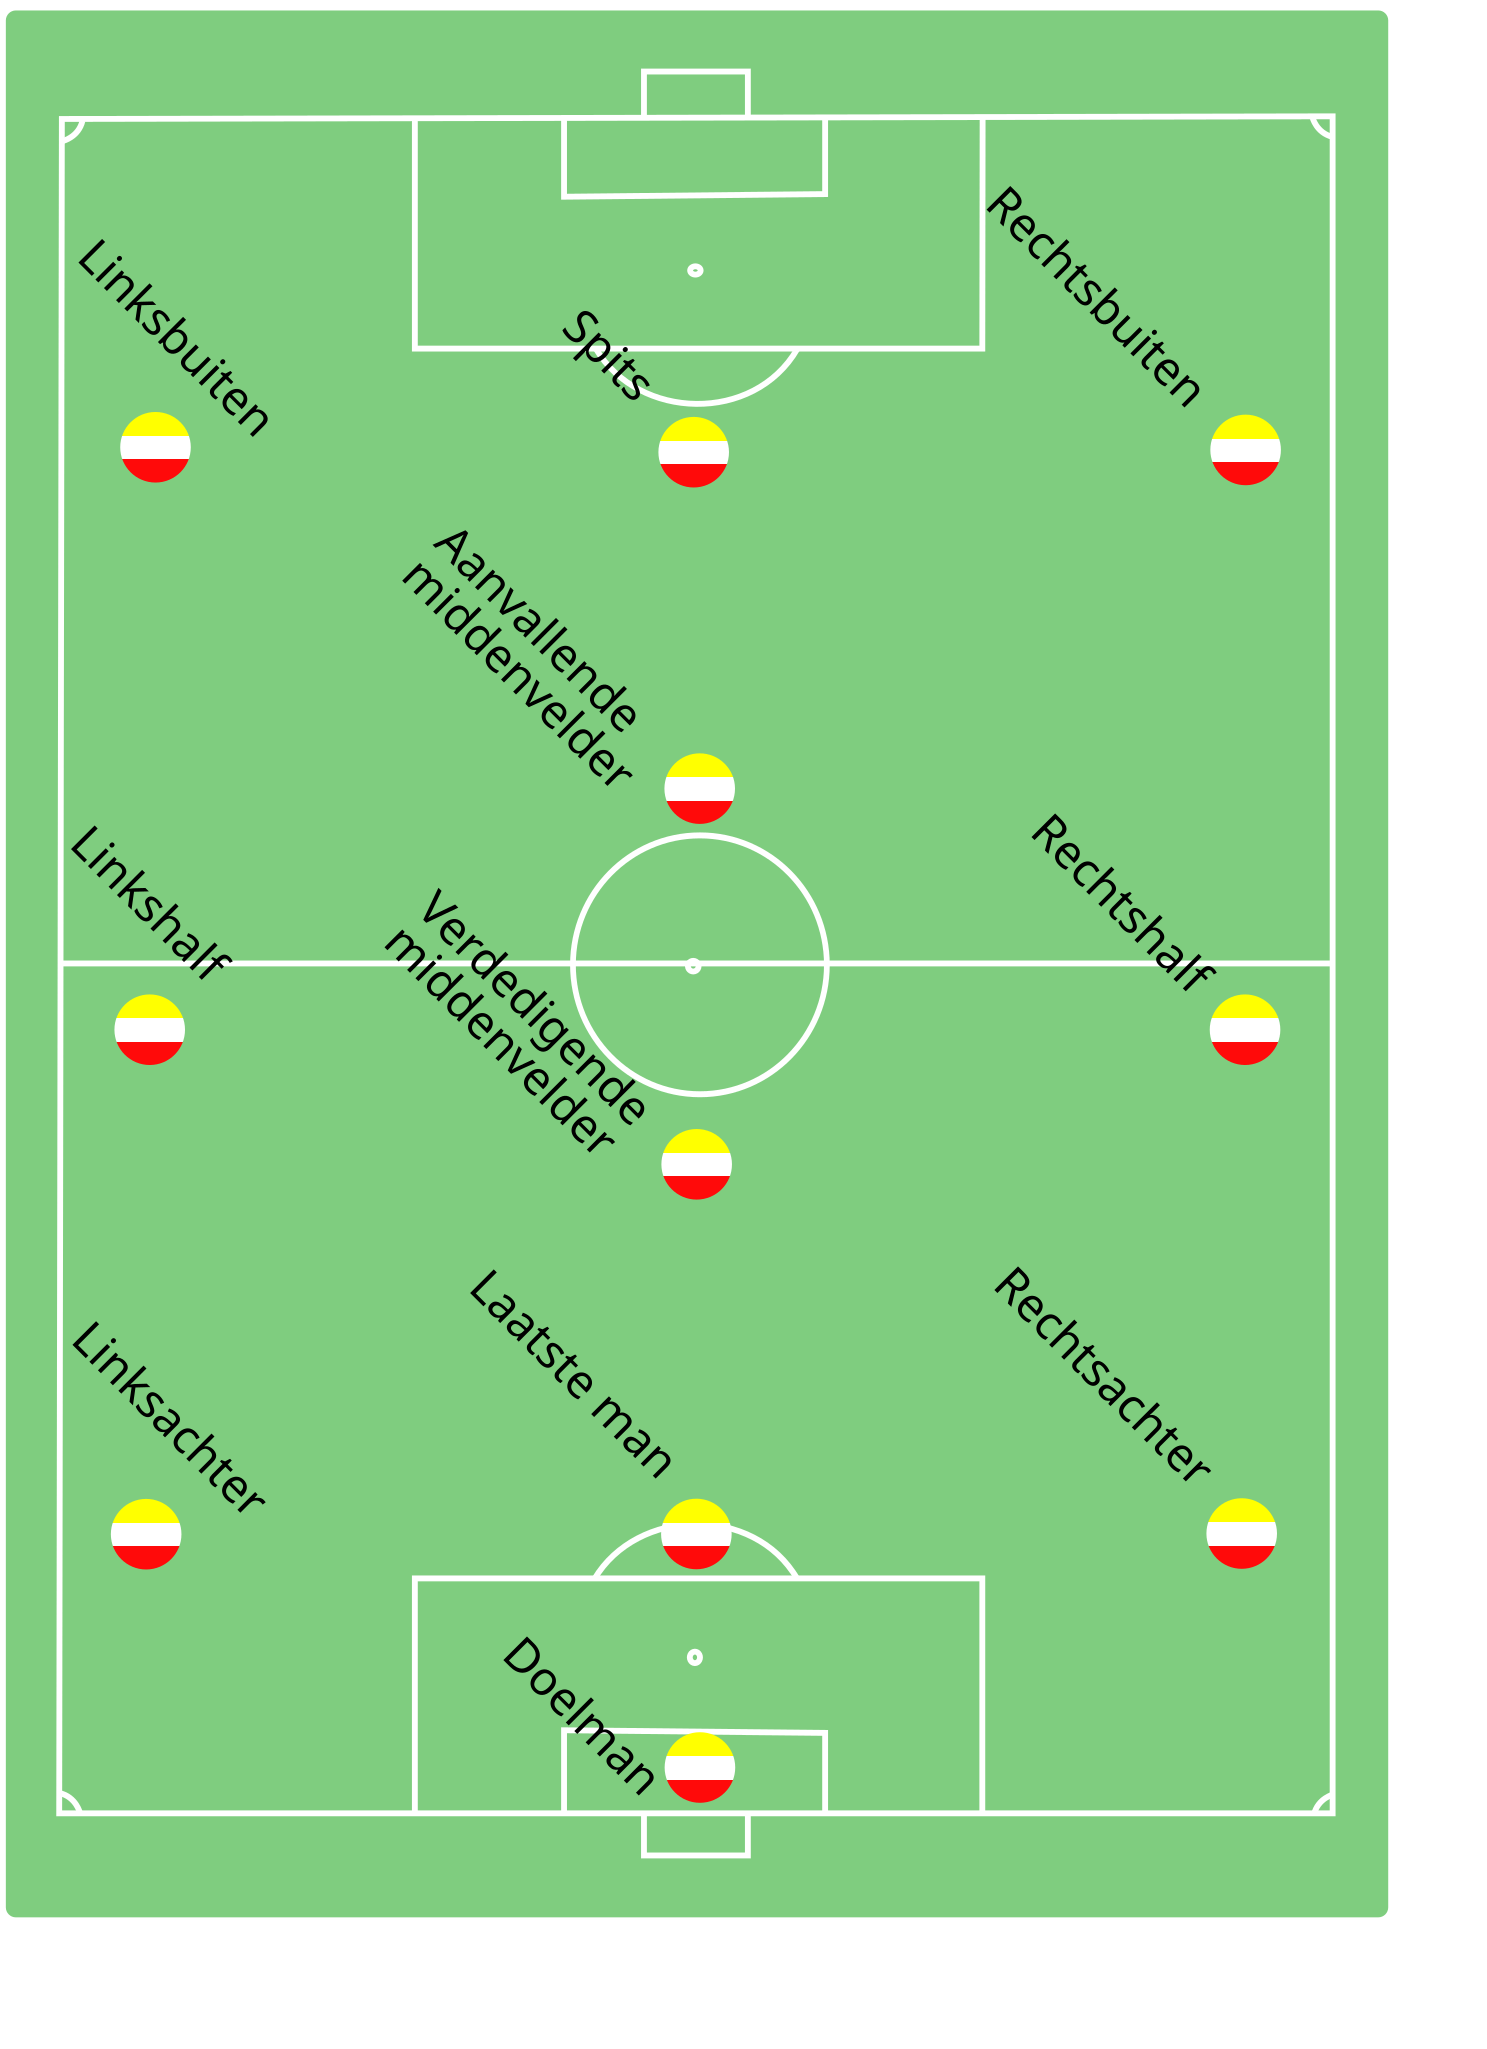 bovenste ei intelligentie File:Voetbalopstelling 3-4-3 ruit.svg - Wikimedia Commons